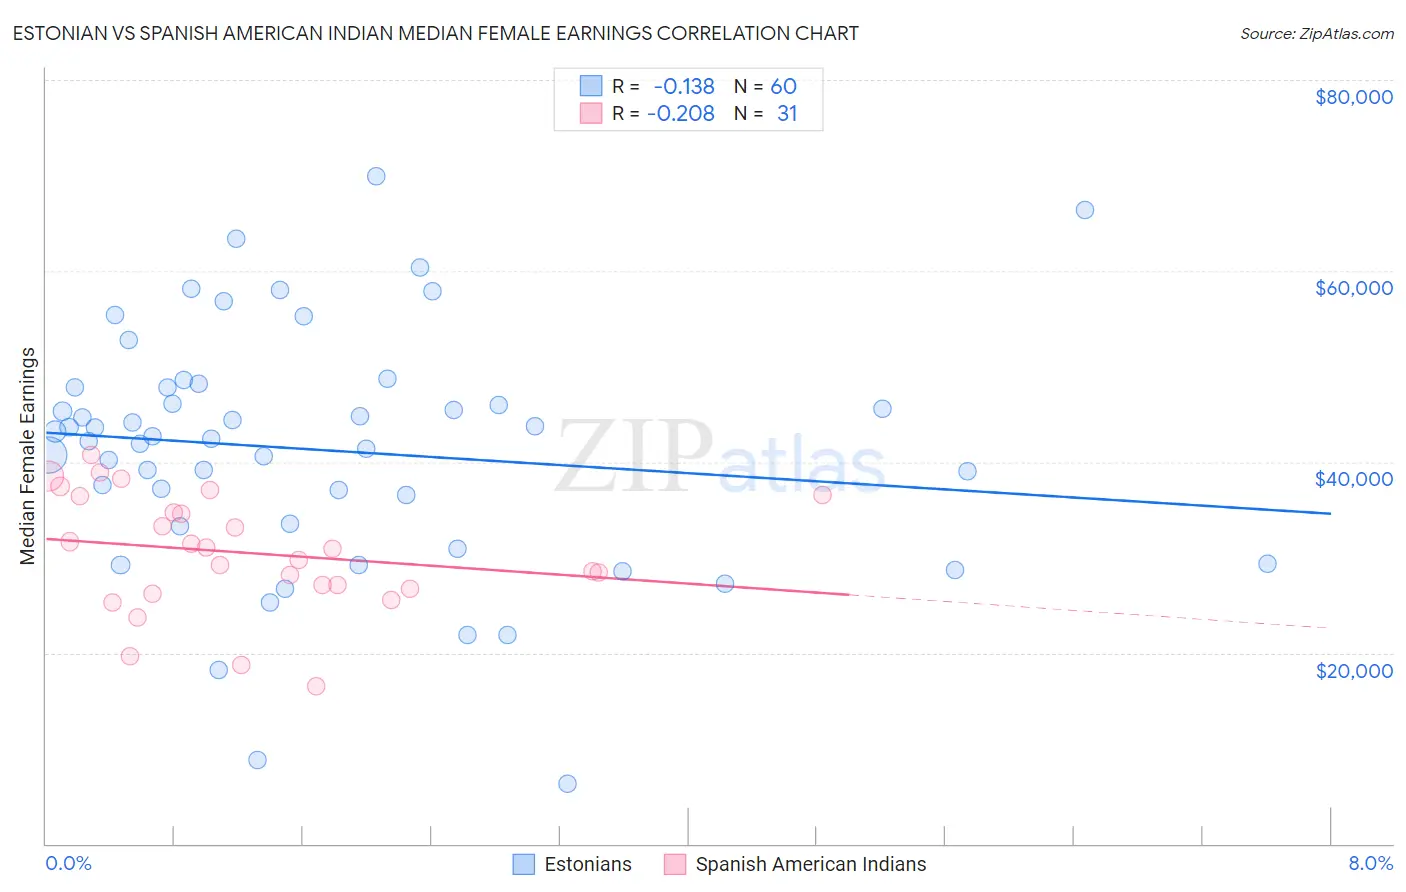 Estonian vs Spanish American Indian Median Female Earnings